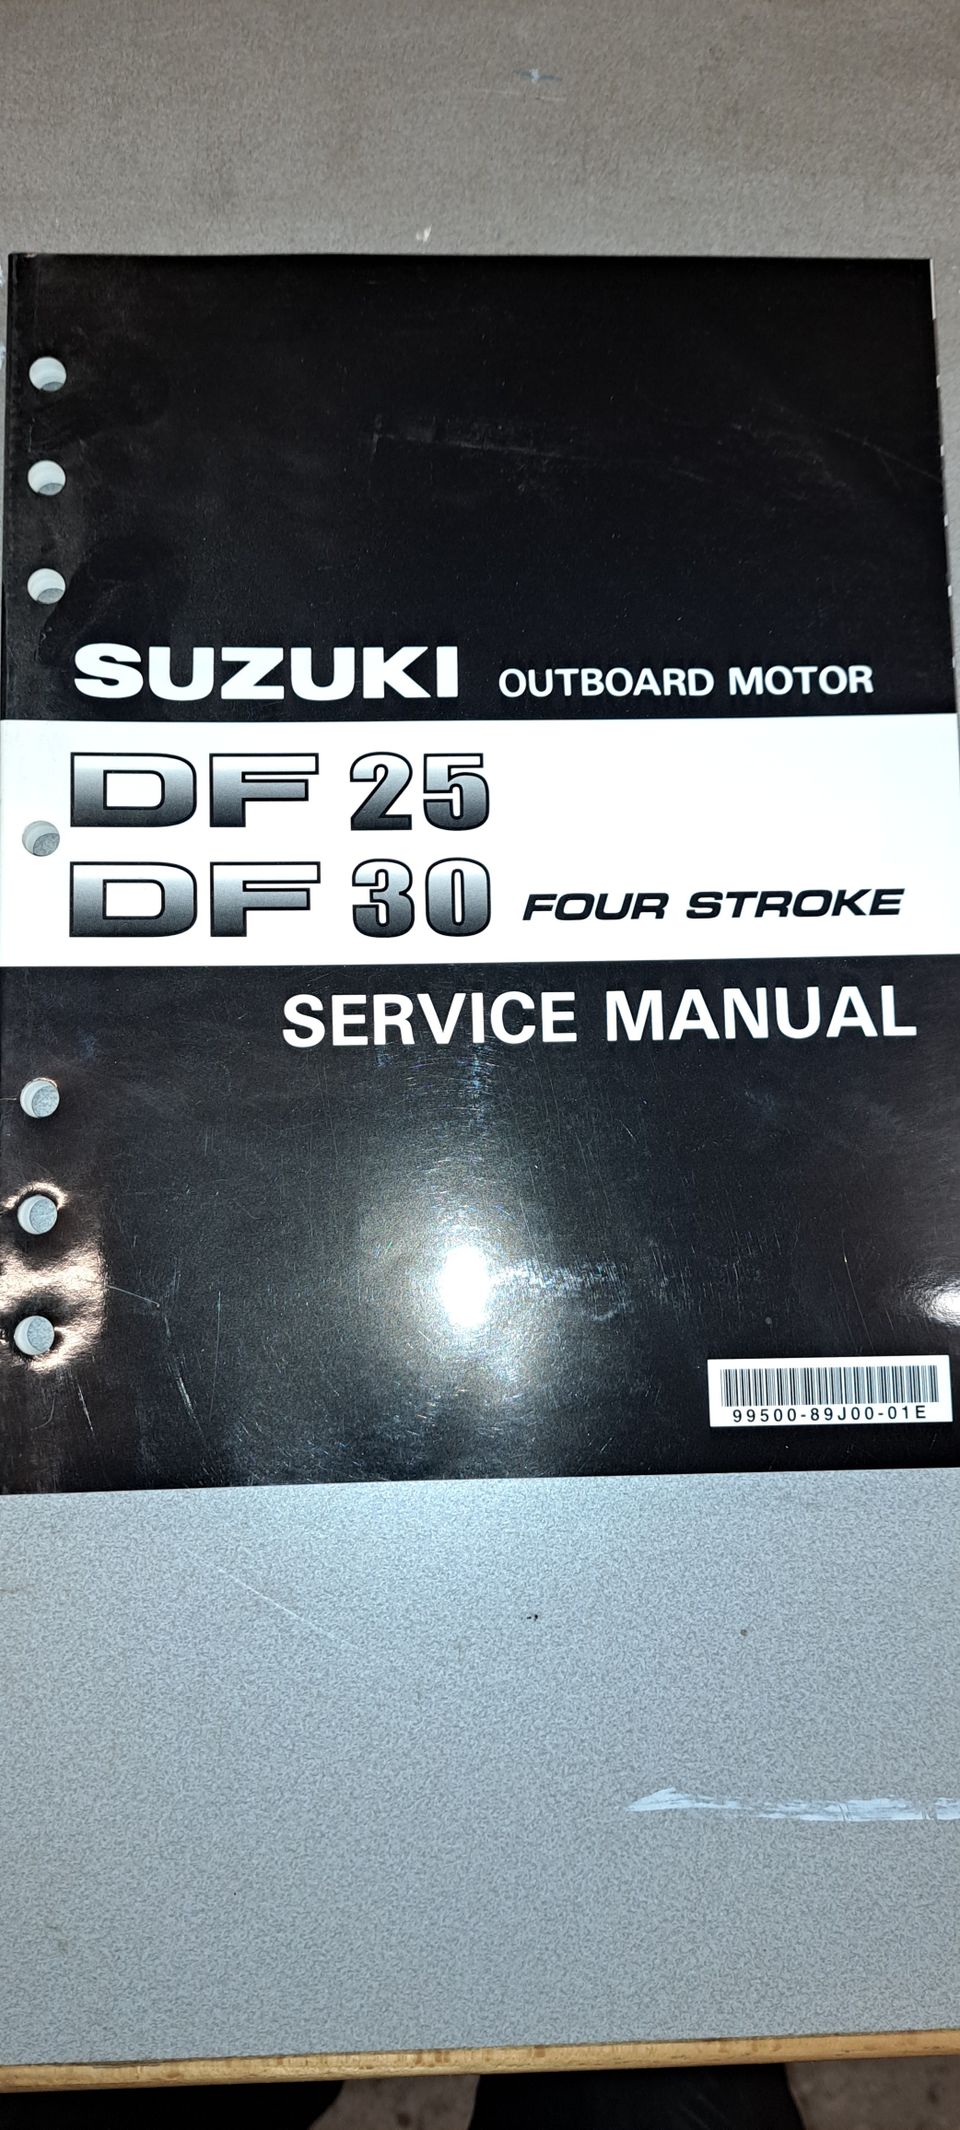 Service Manual Suzuki DF